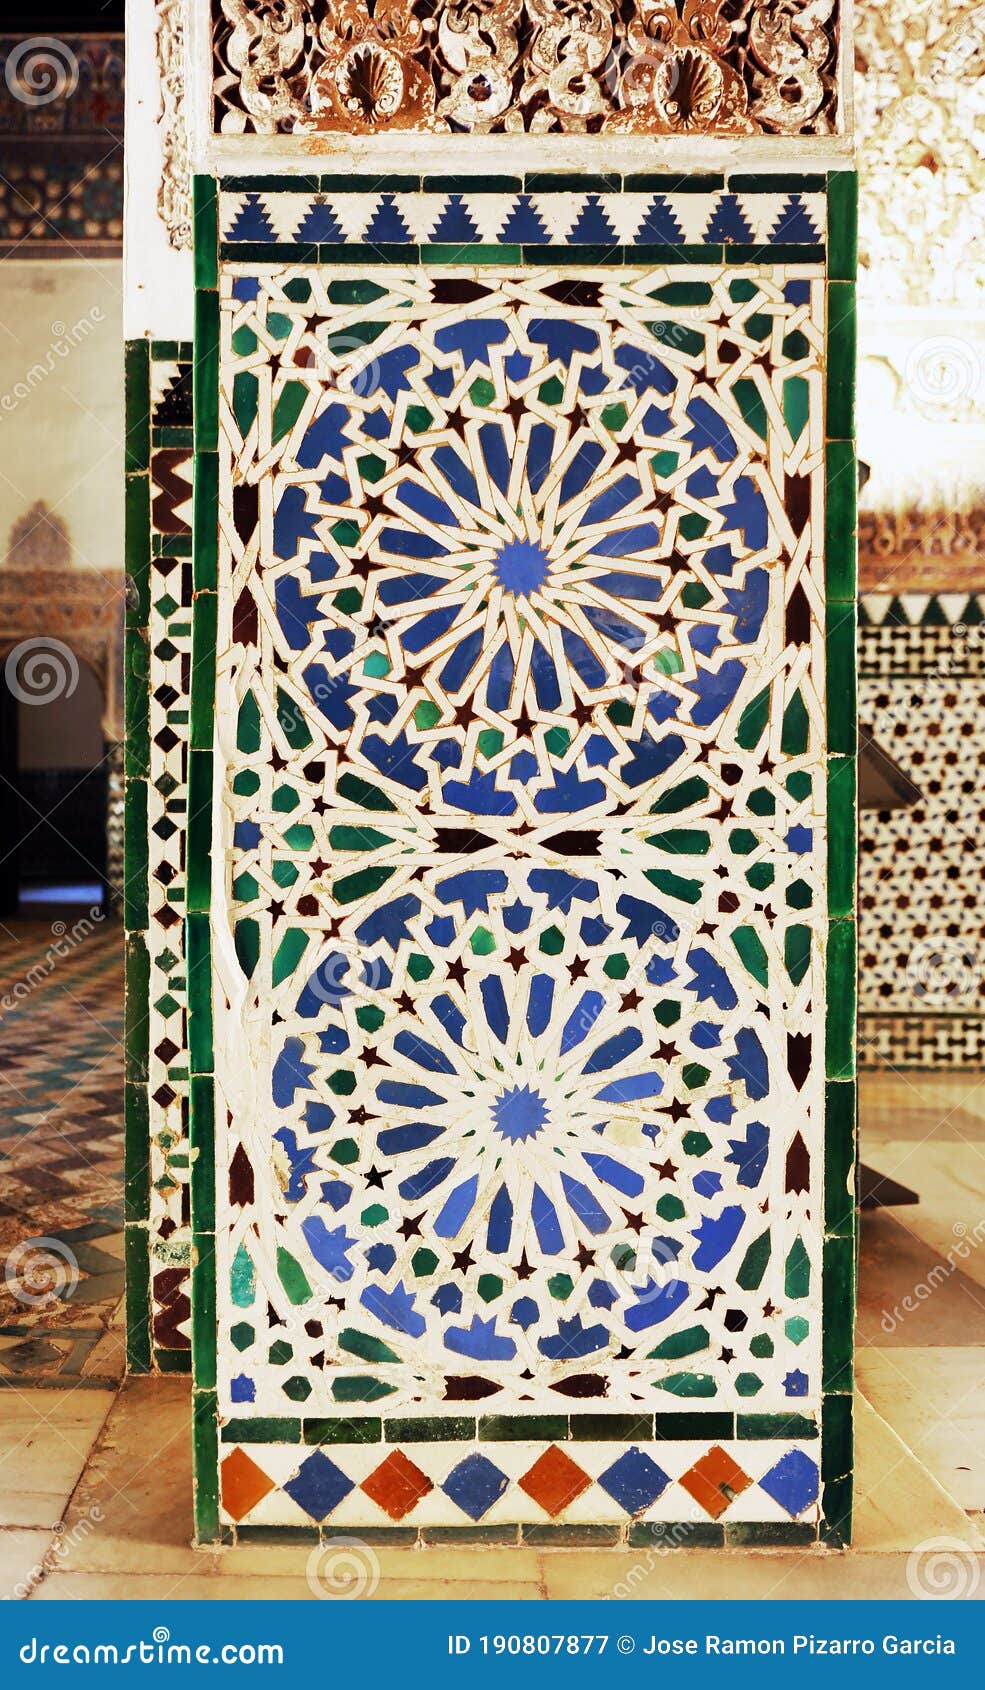 tiles of al andalus. alcazar of seville spain. arab pattern decoration